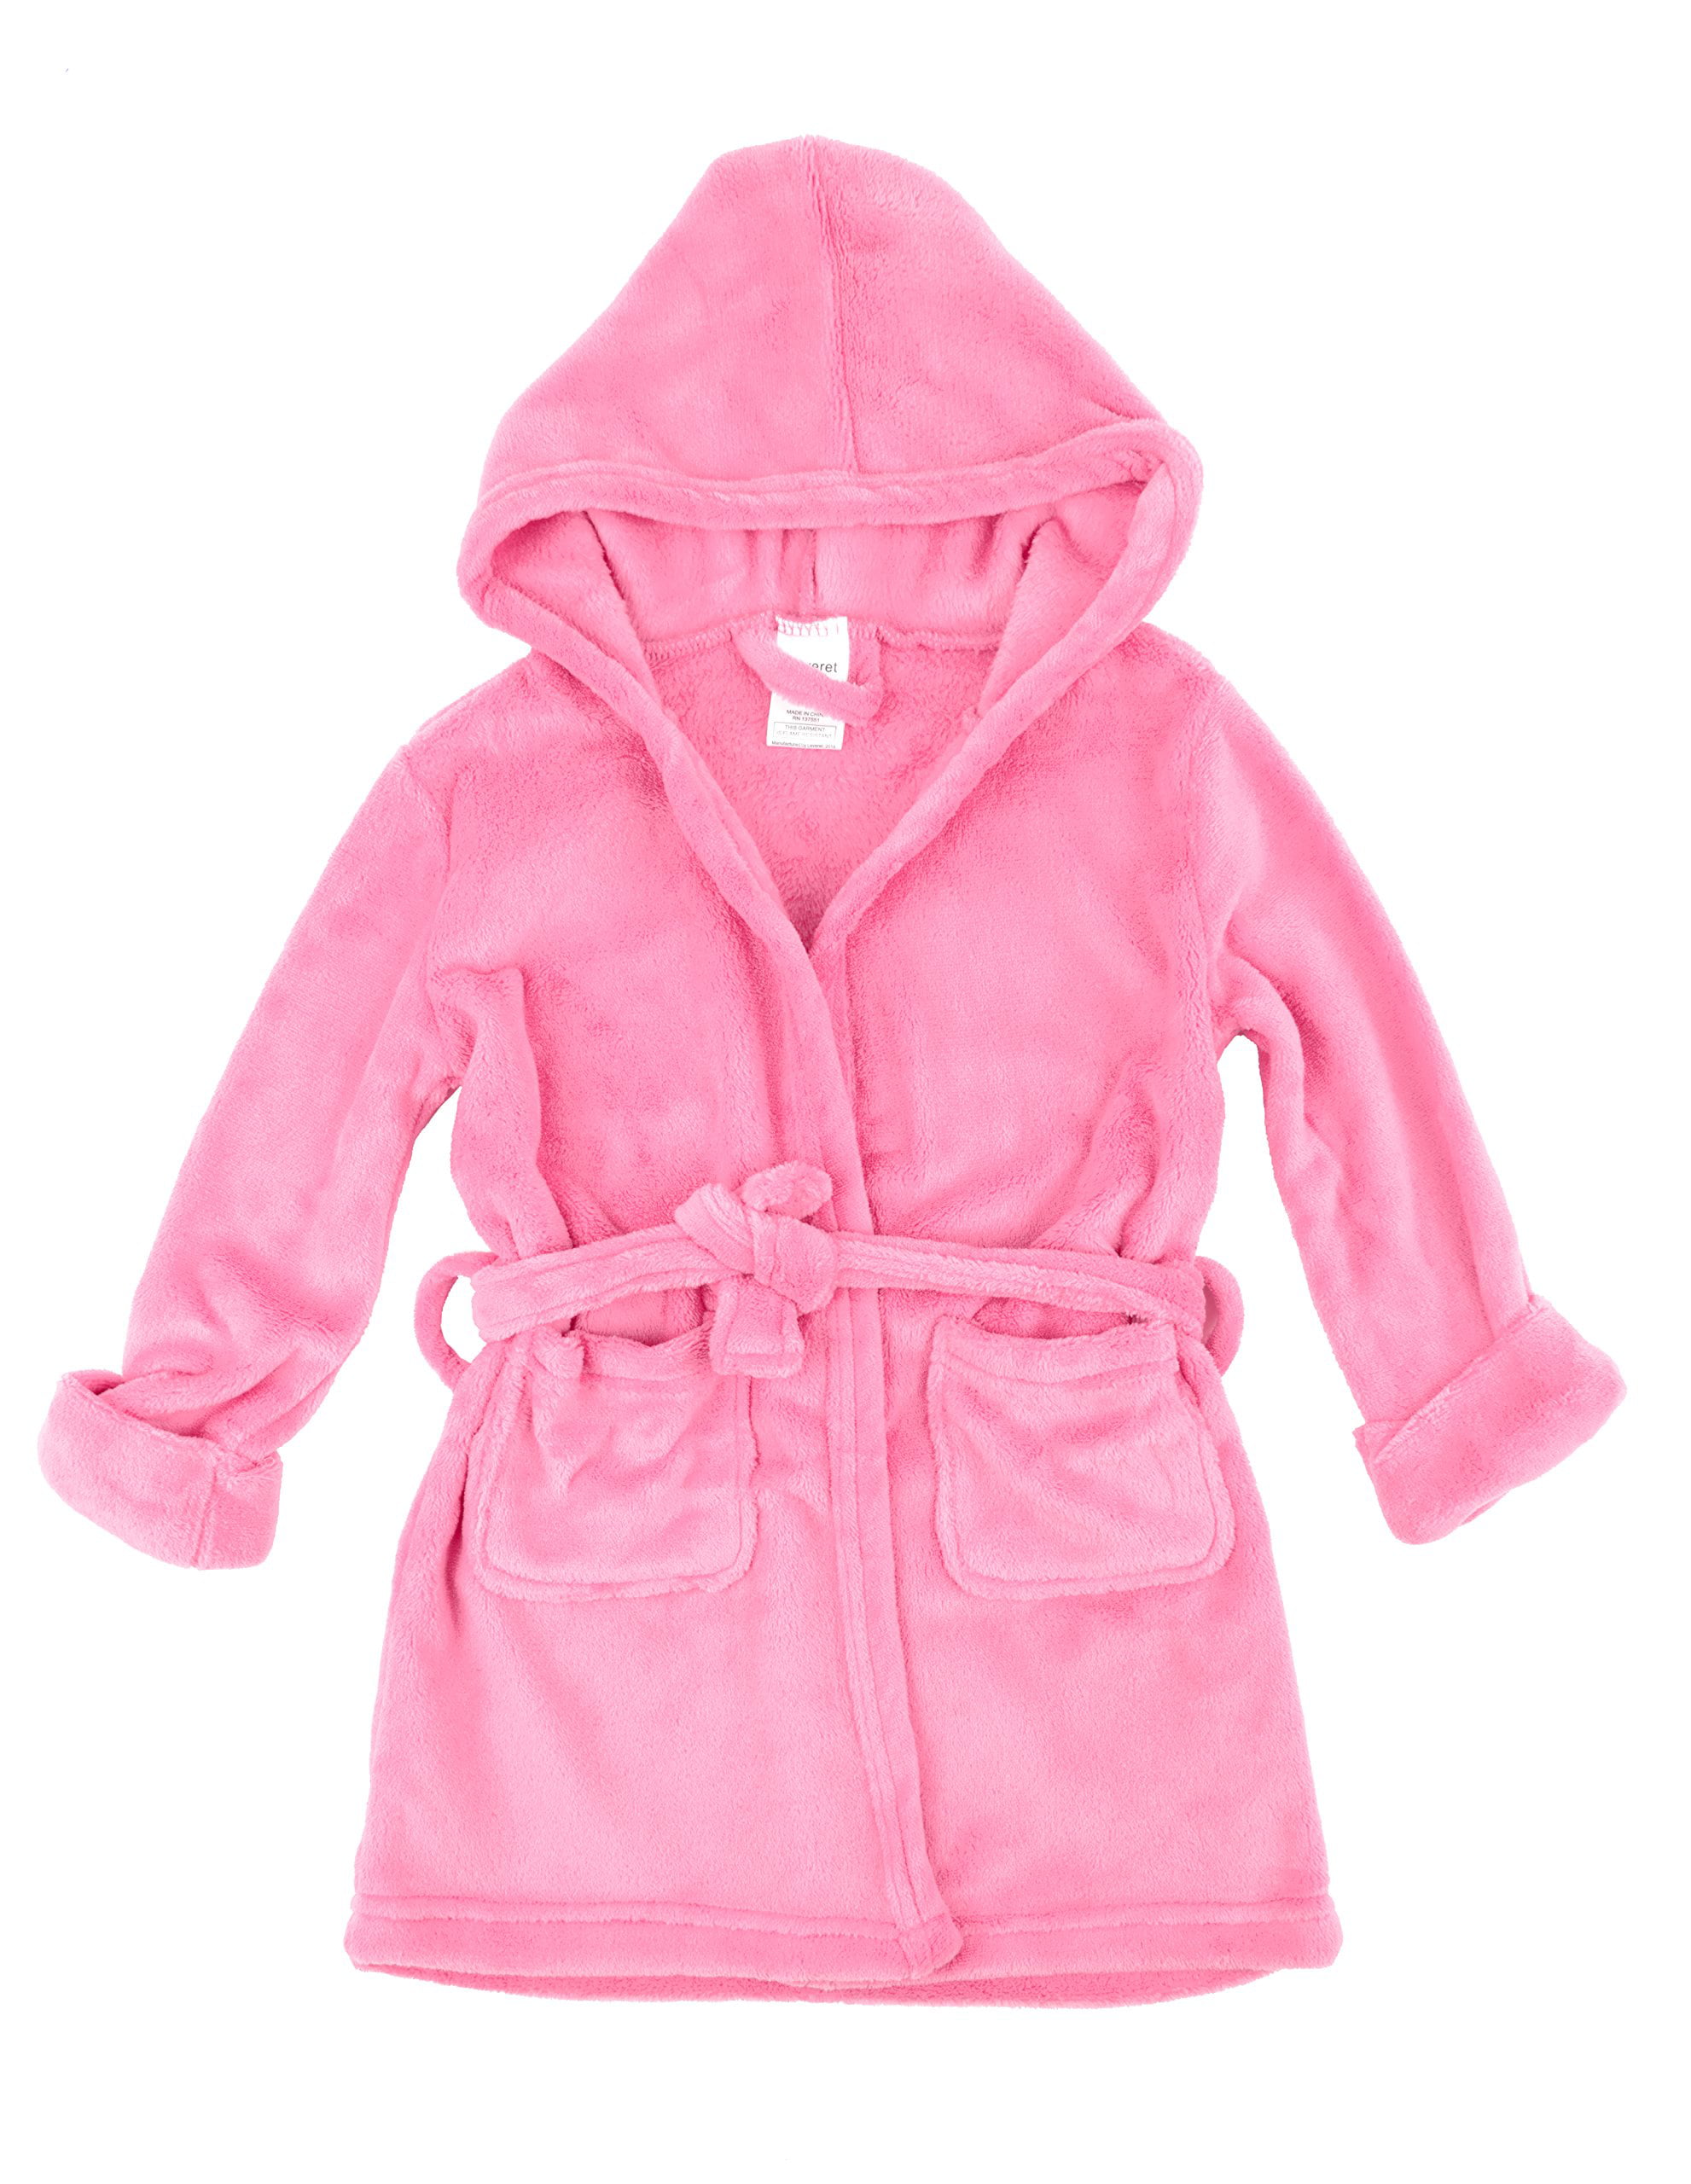 Elowel Pajamas Kids Robe with Hood for Boys and Girls Fleece Robes Light  Pink Size 14Y - Walmart.com